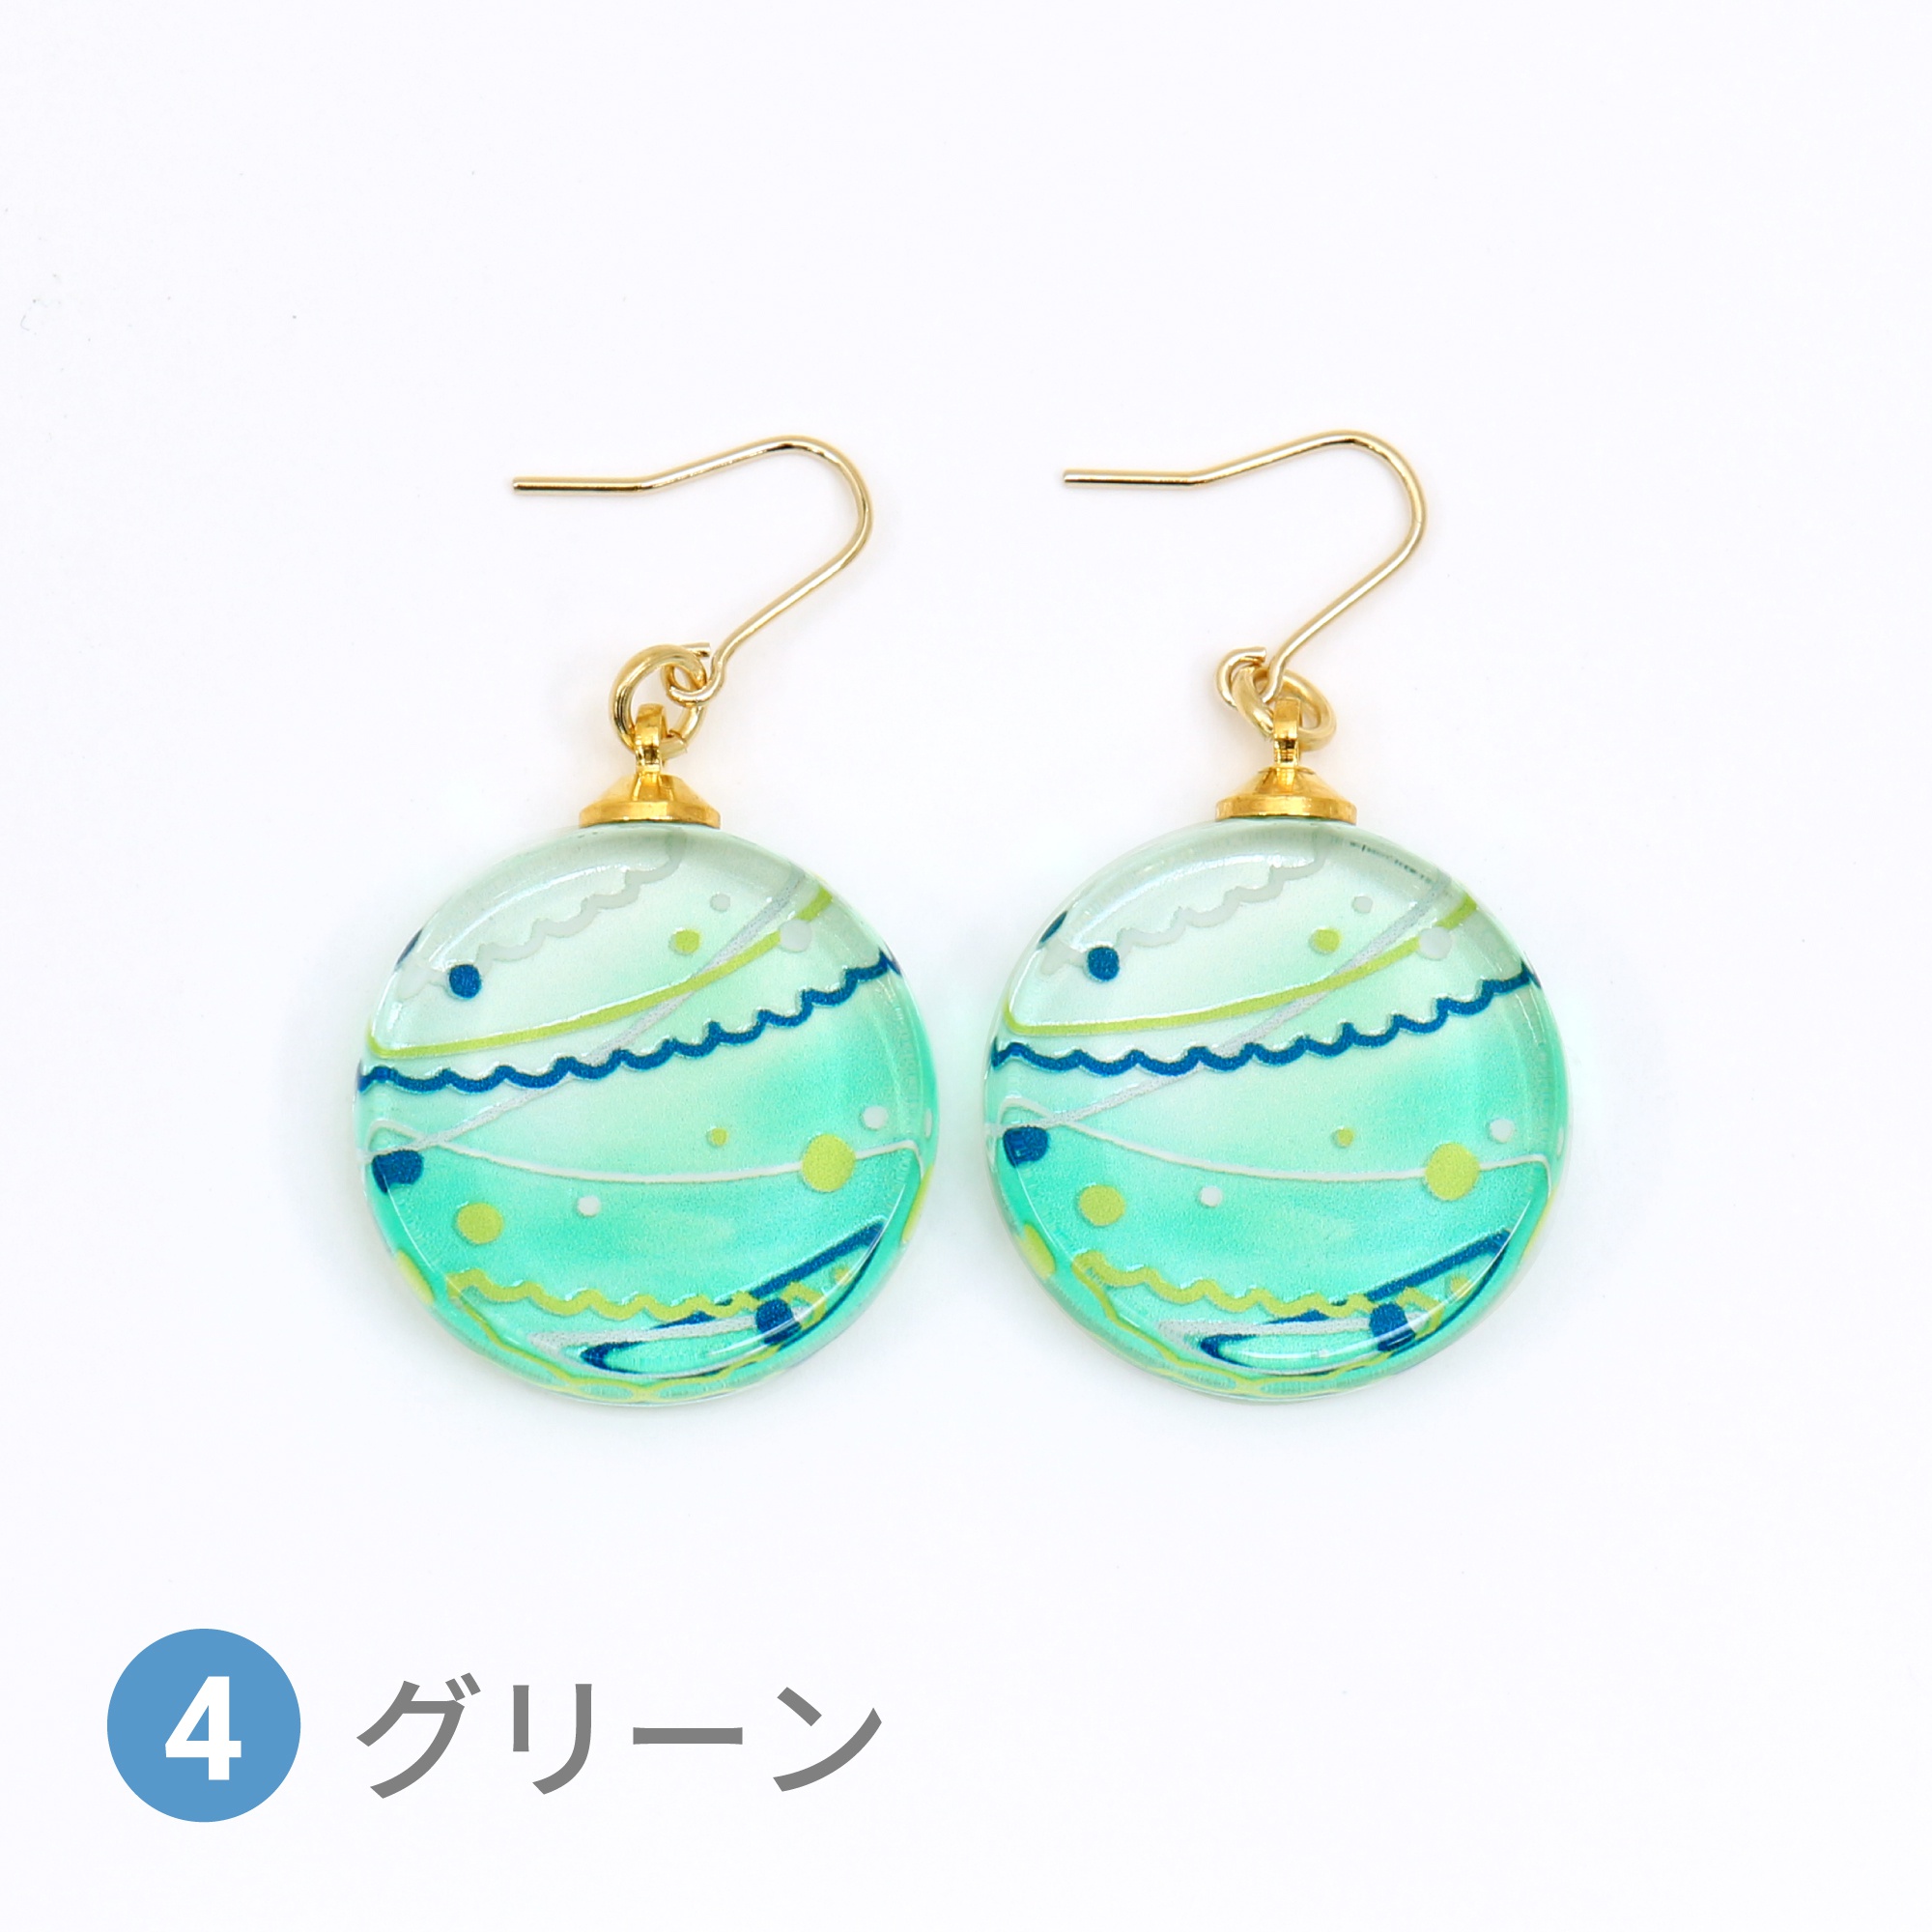 Glass accessories Pierced Earring WATER BALLOON green round shape